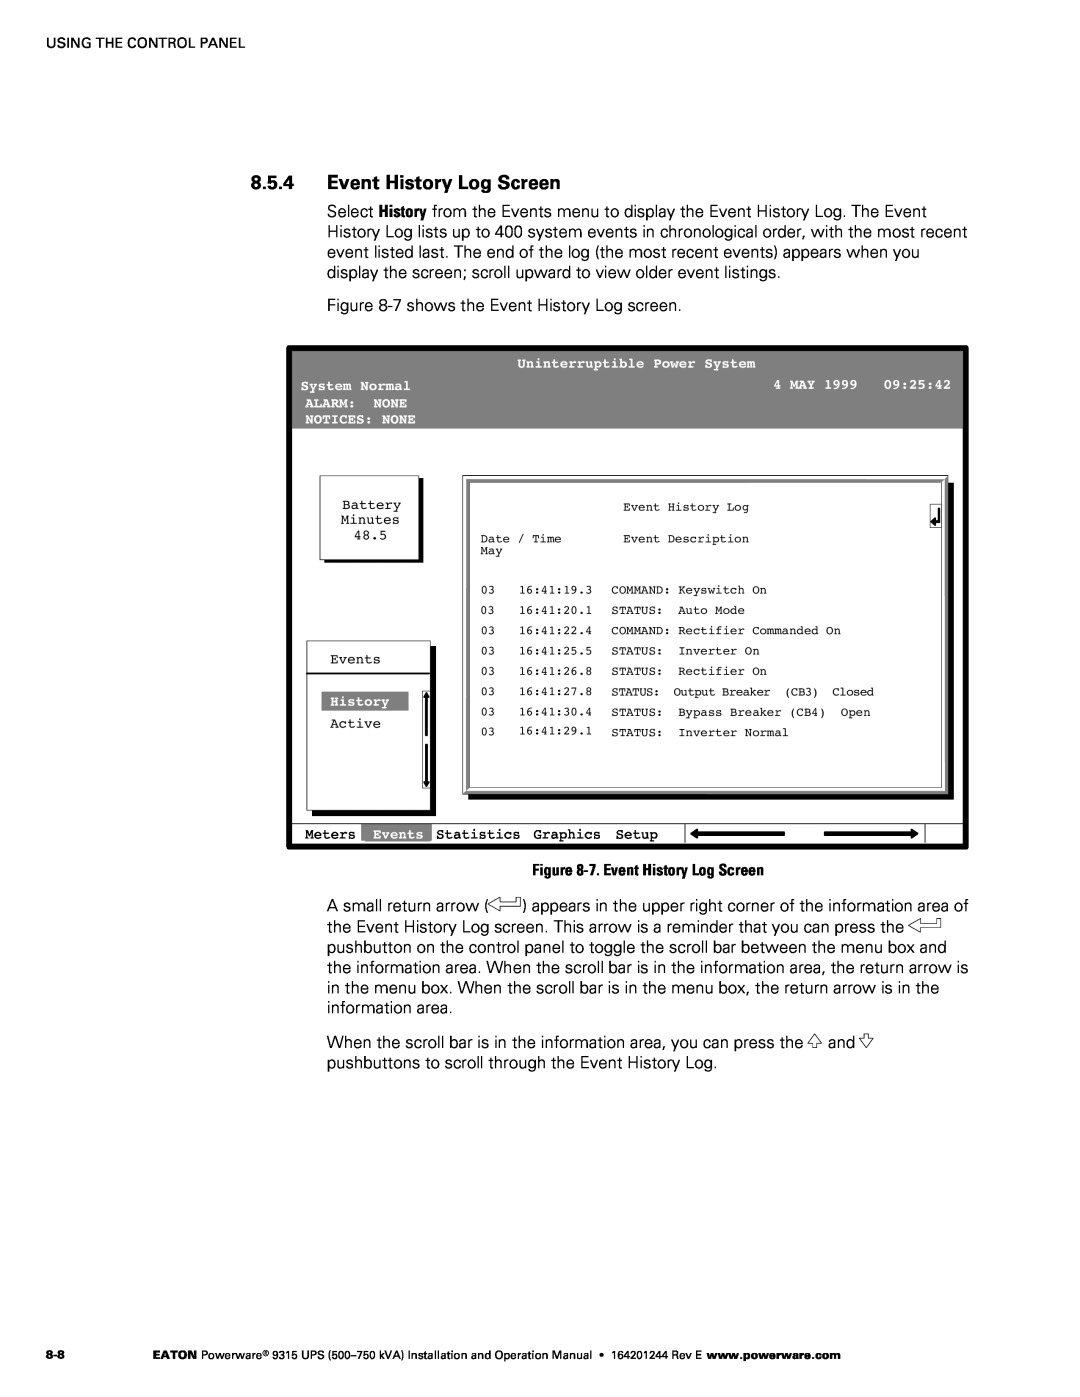 Powerware Powerware 9315 operation manual Event History Log Screen 